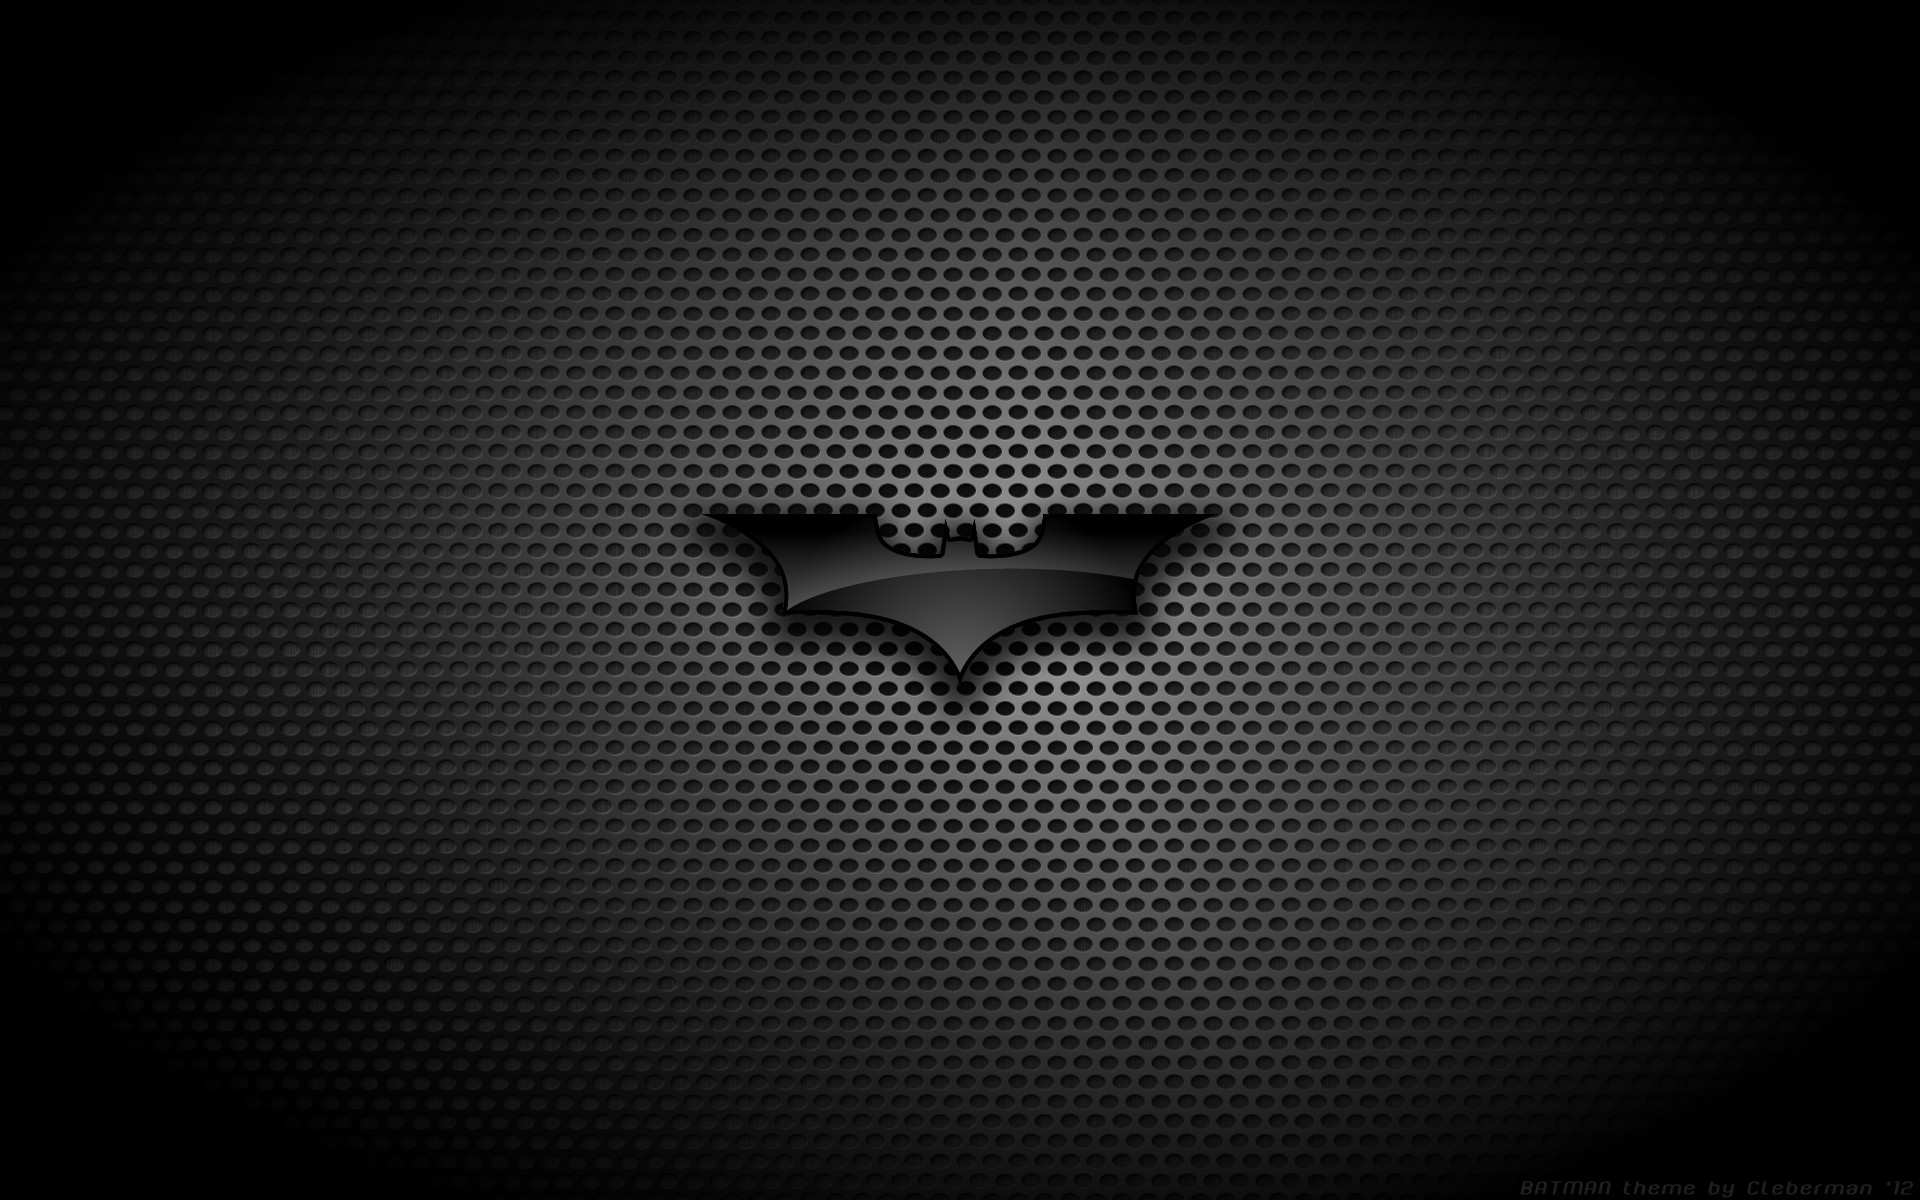 batman logo wallpaper wide with high resolution desktop wallpaper on movies category similar with arkham knight beyond comic iphone joker logo superman